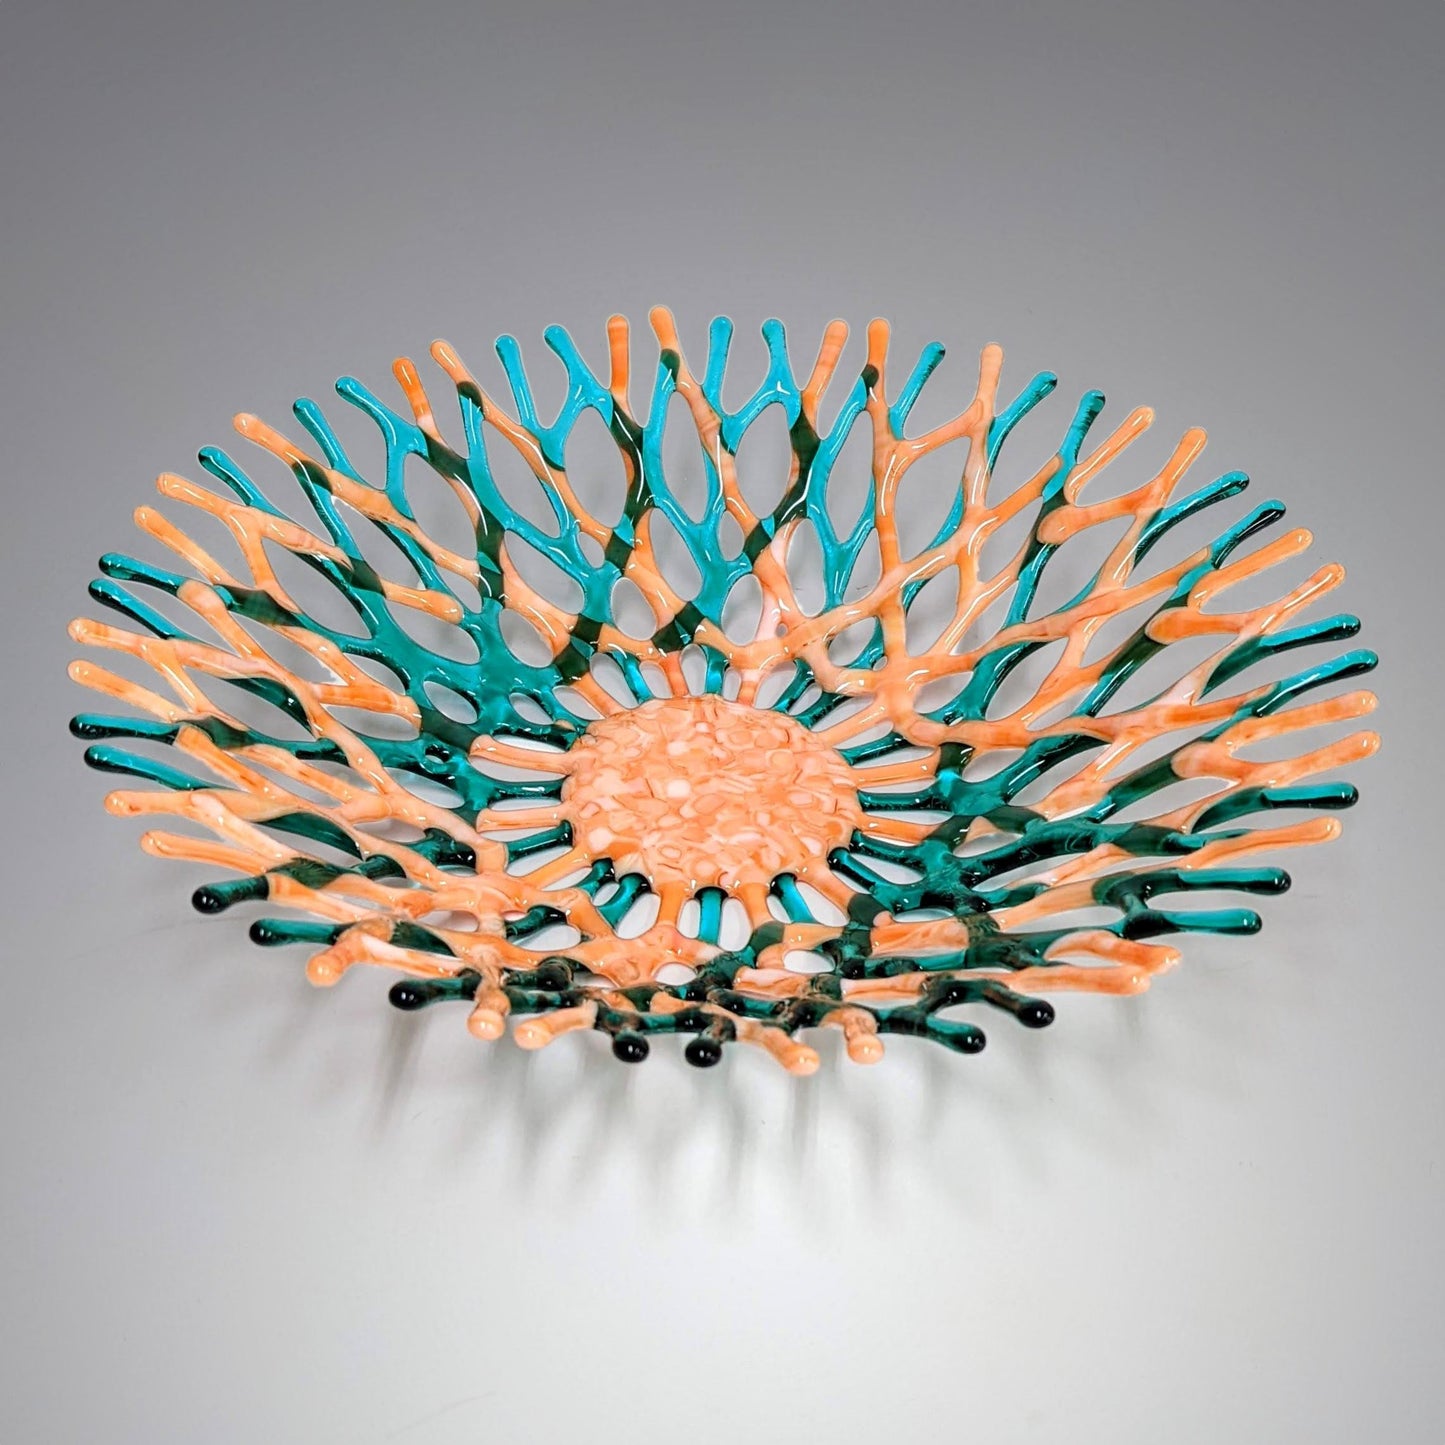 Glass Art Coral Bowl in Aqua Blue Green and Light Orange | Beach Decor